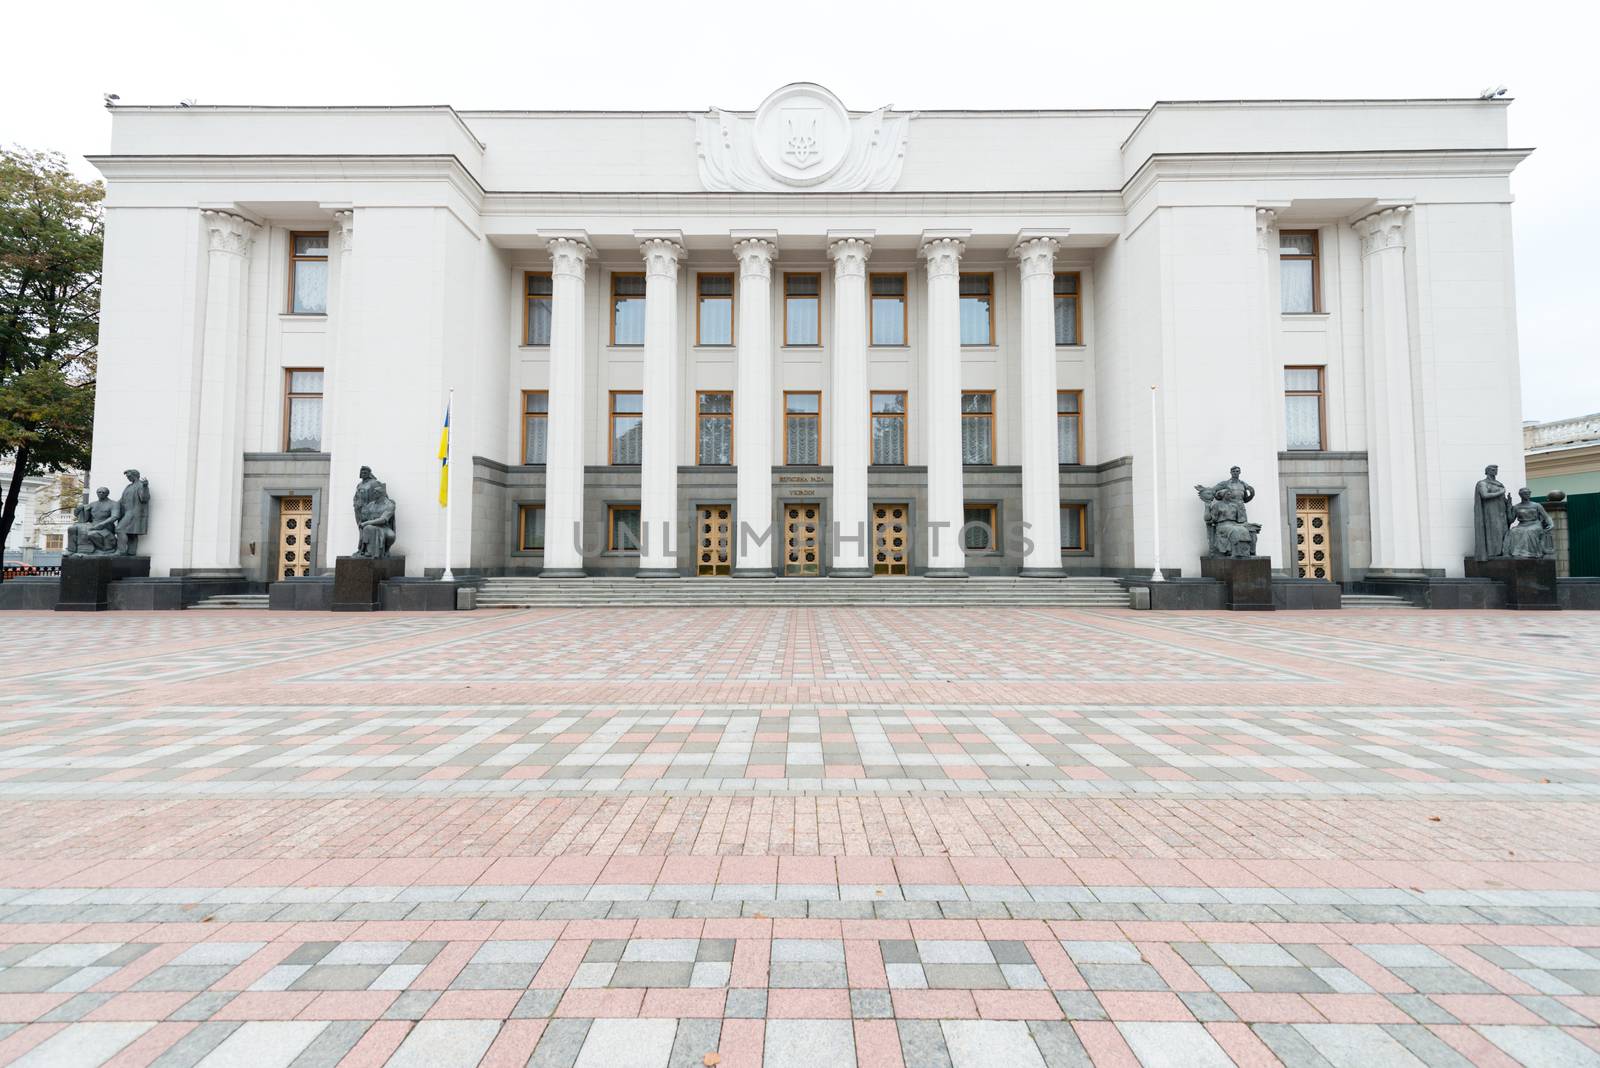 Parliament of Ukraine (Verkhovna Rada) building main entrance in Kiev, Ukraine 